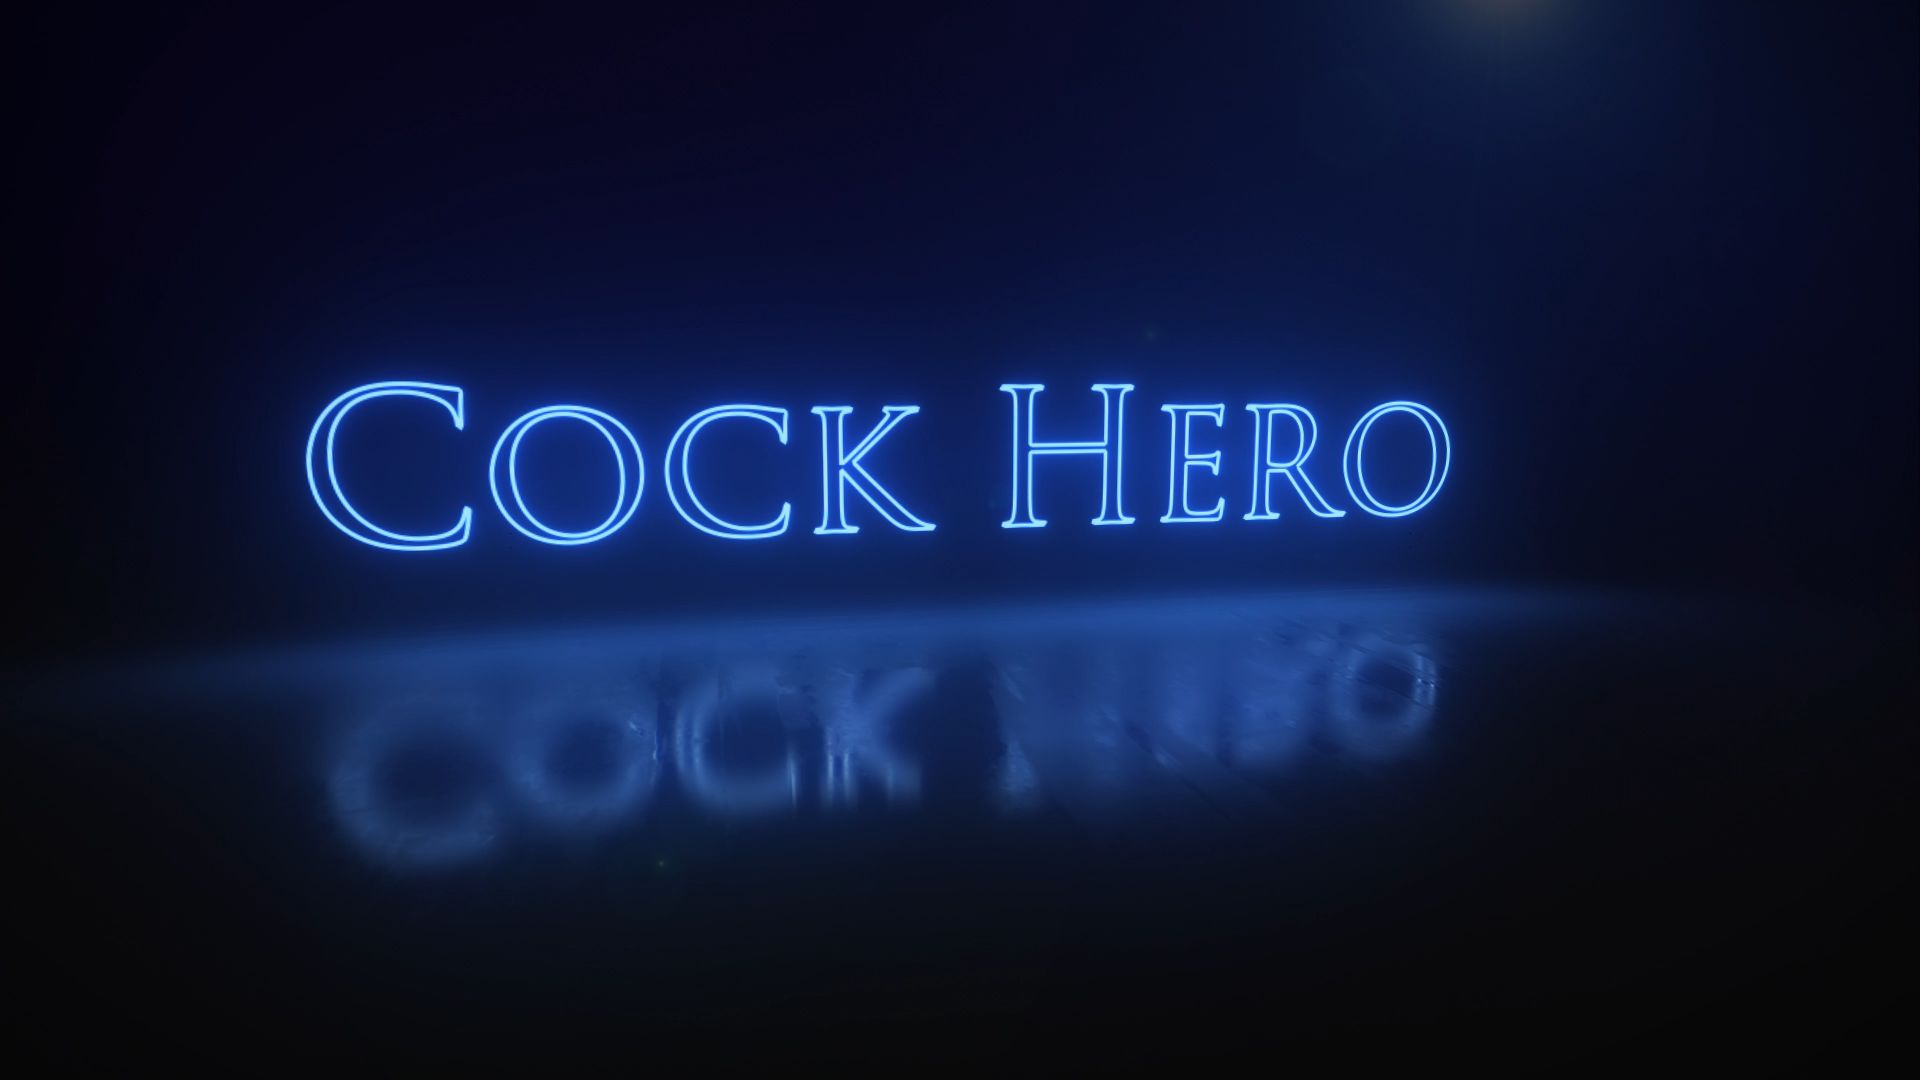 Cock heor